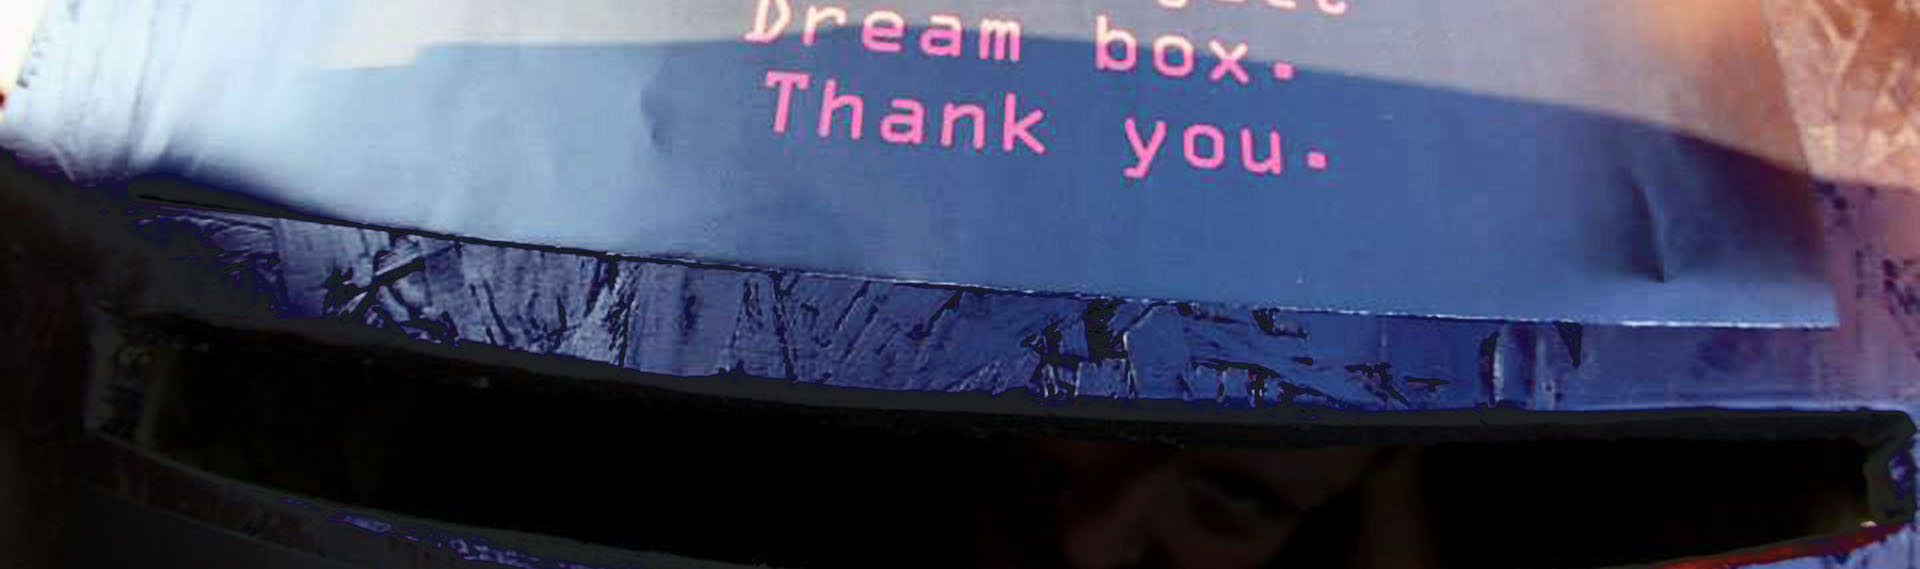 Performance Dream box by artist Katarina Rasic